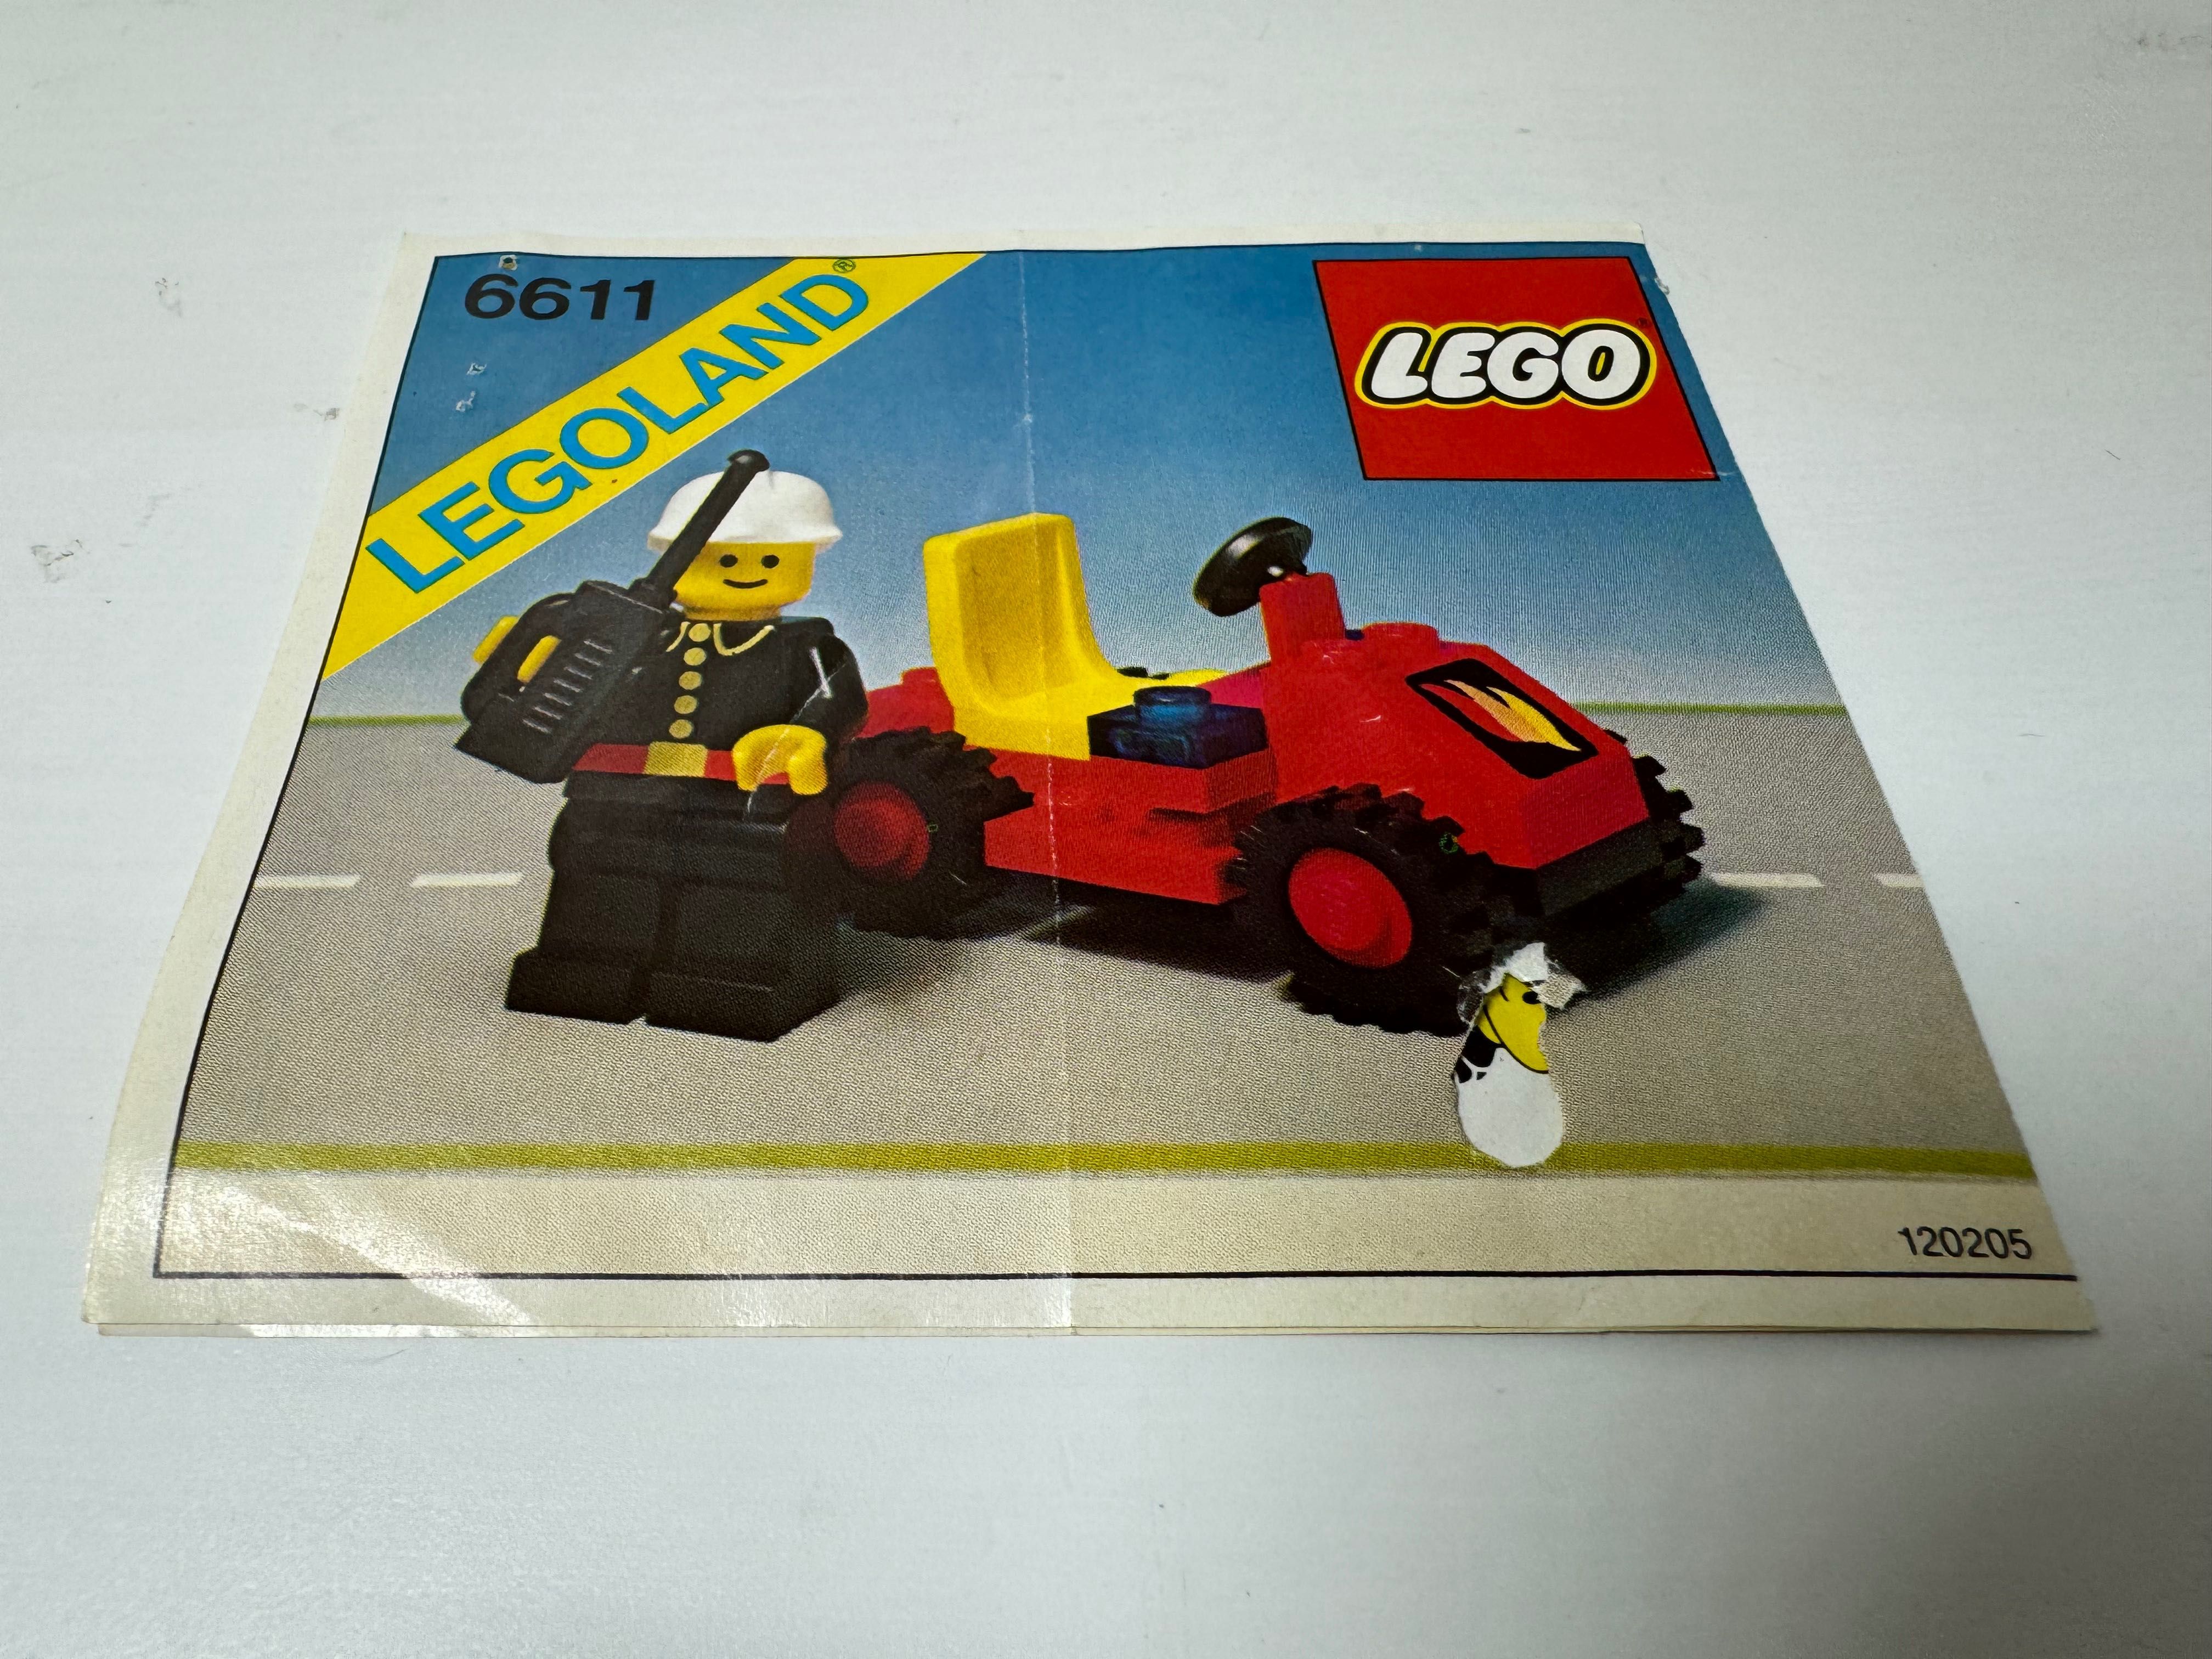 LEGO classic town; zestaw 6611 Fire Chief's Car